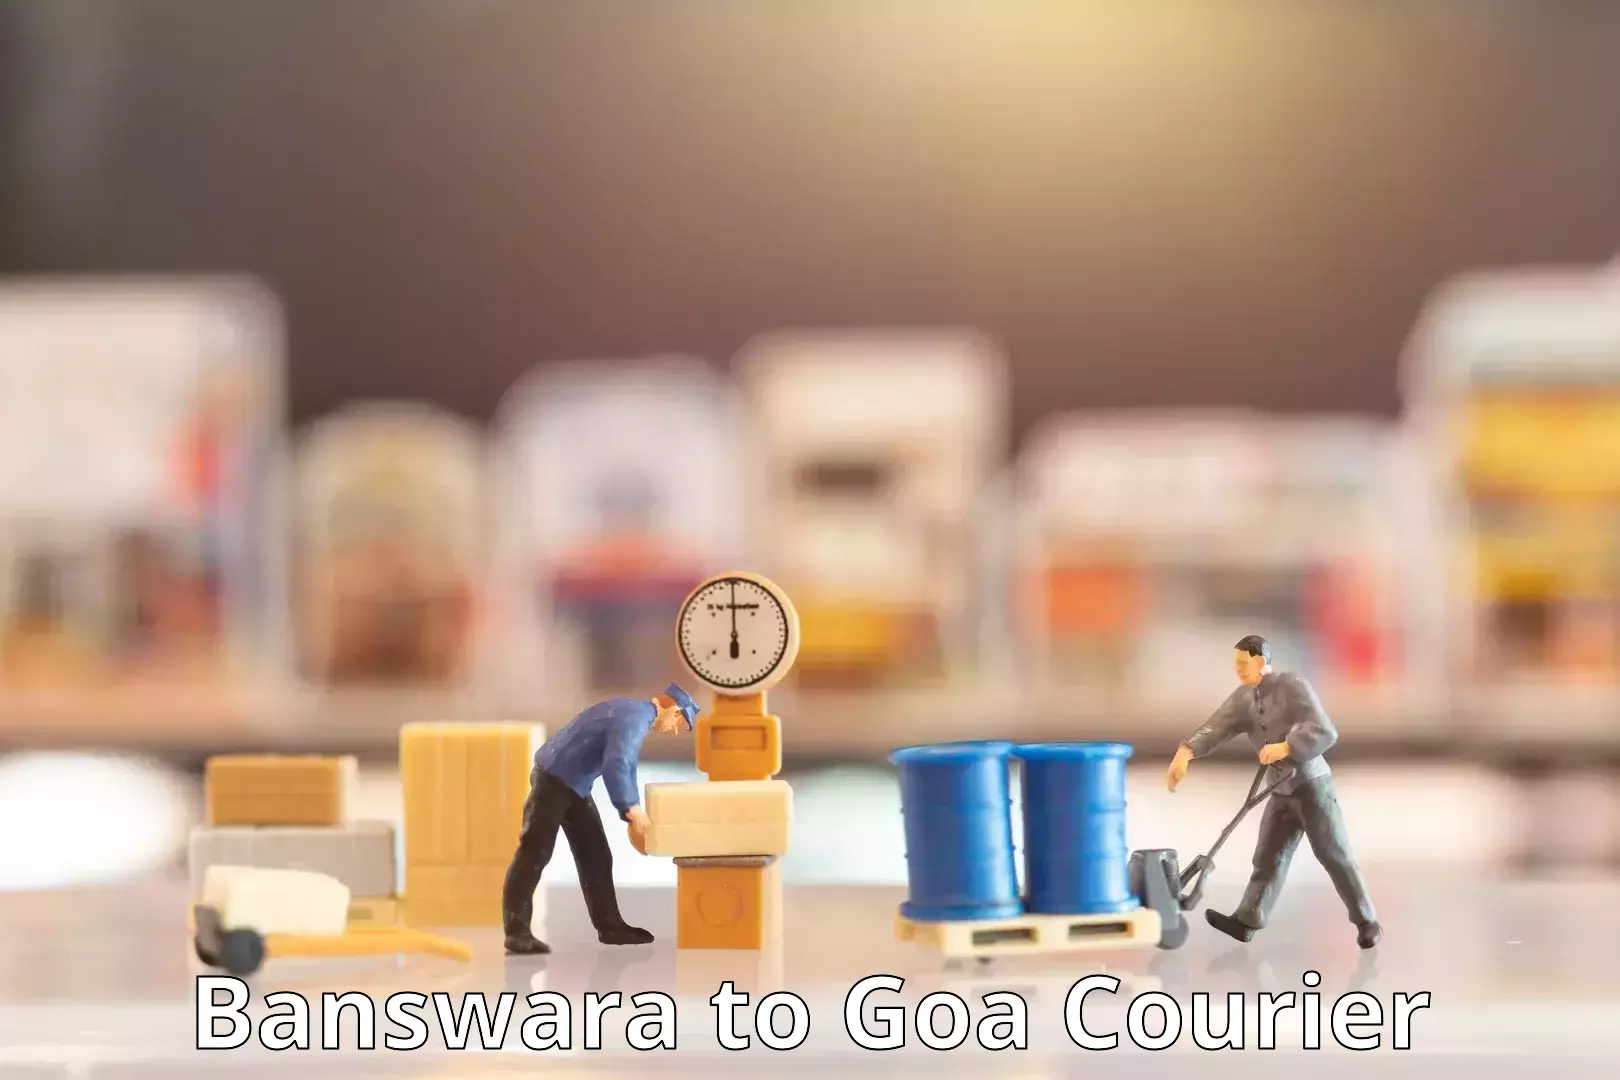 Courier service partnerships Banswara to Goa